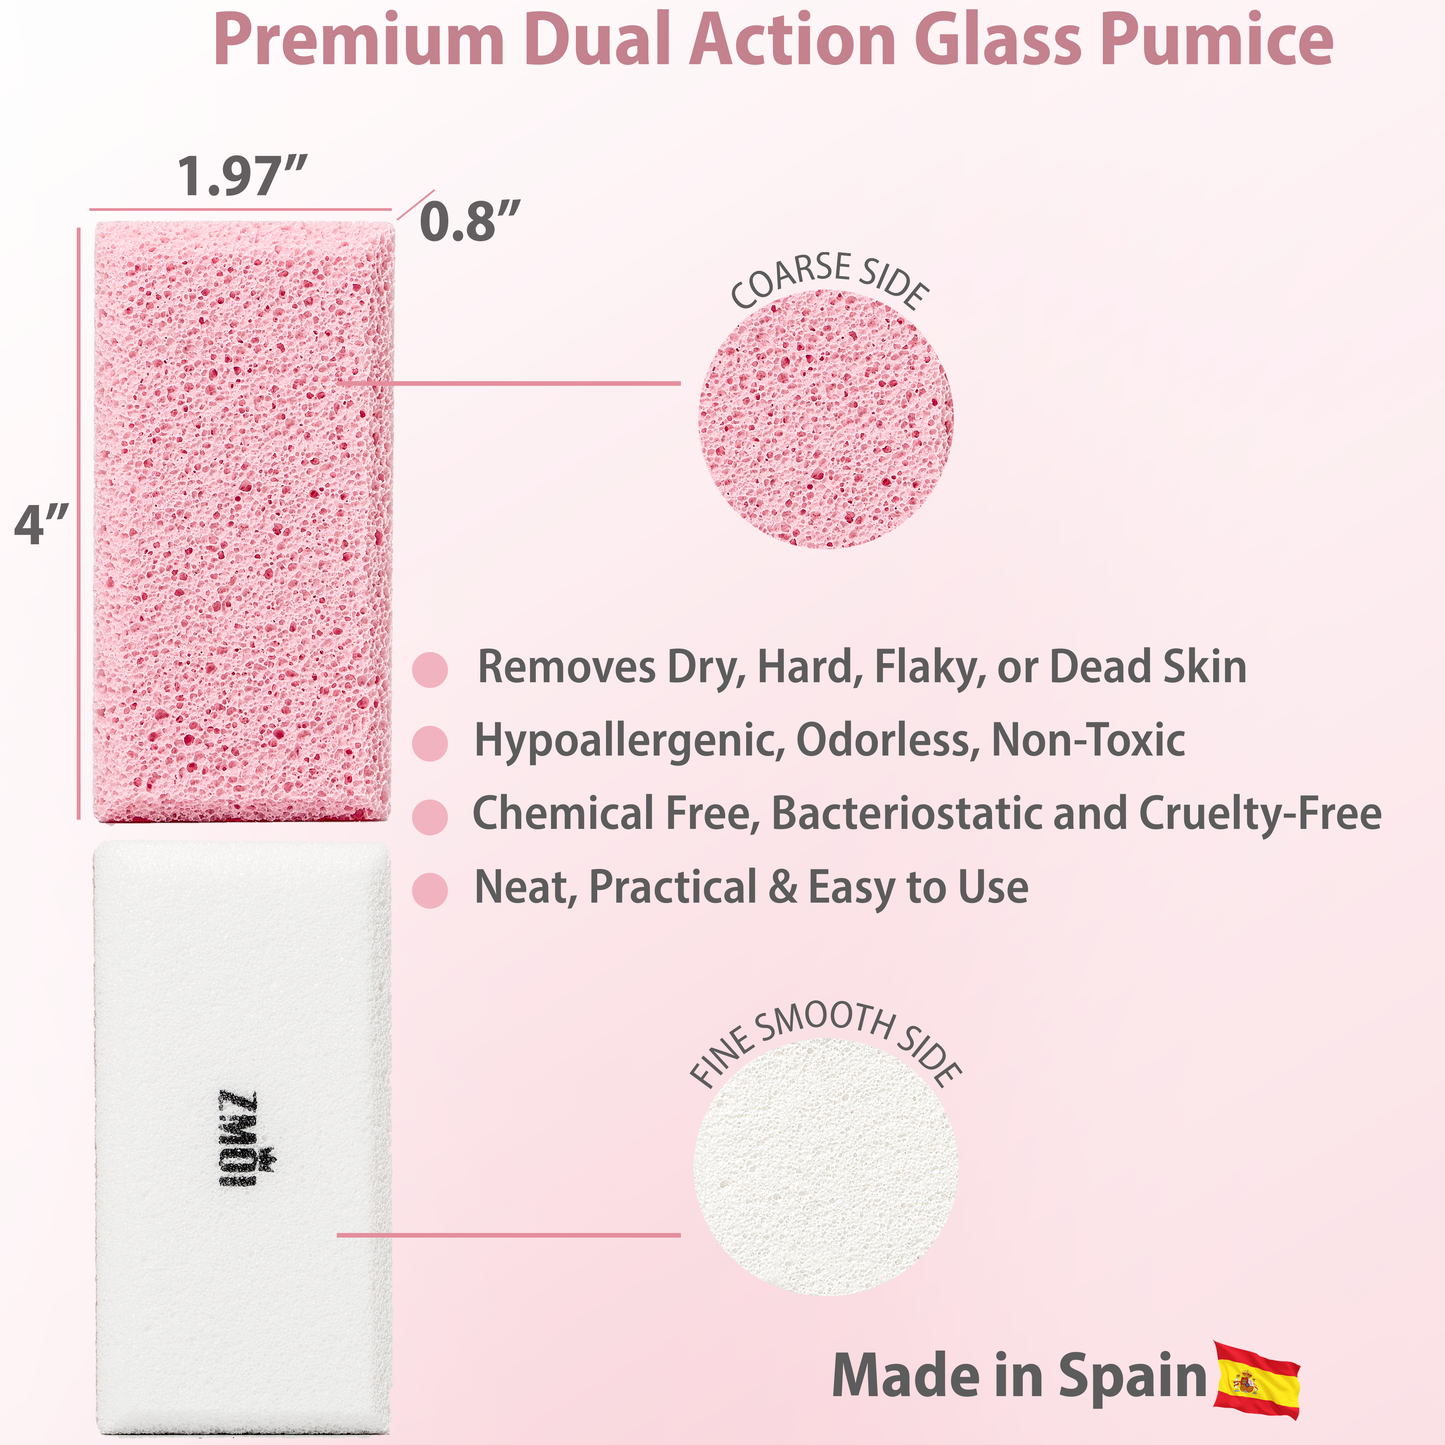 2-in-1 Siliglass Pumice Stone Callus Remover ( Pink color )